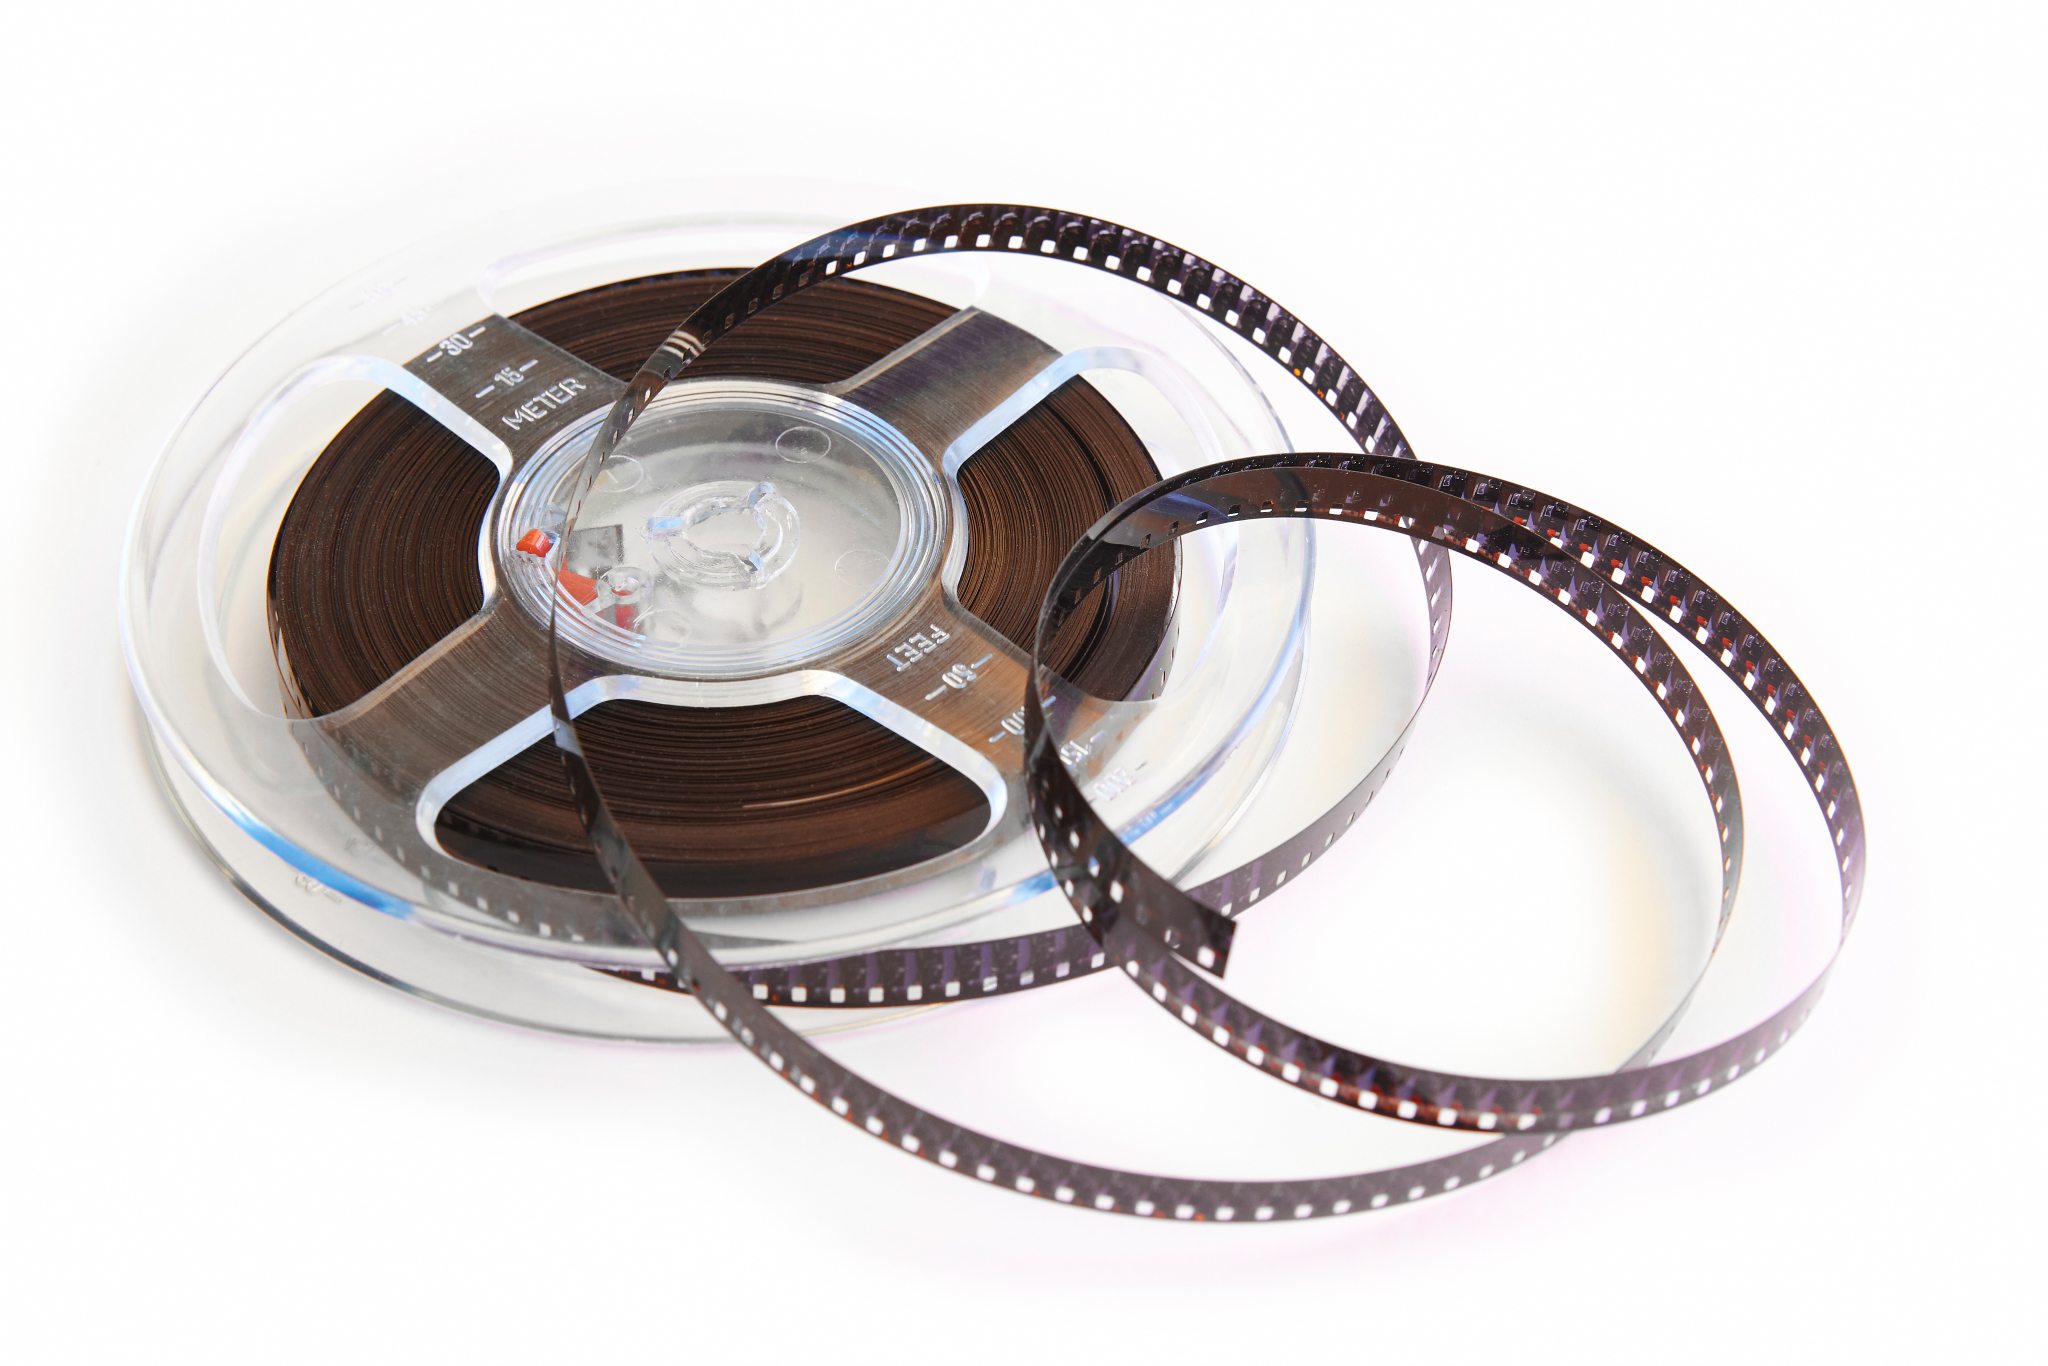 8mm-film-isolated-on-white-vintage-movie-and-film-2022-10-06-20-55-41-utc 1